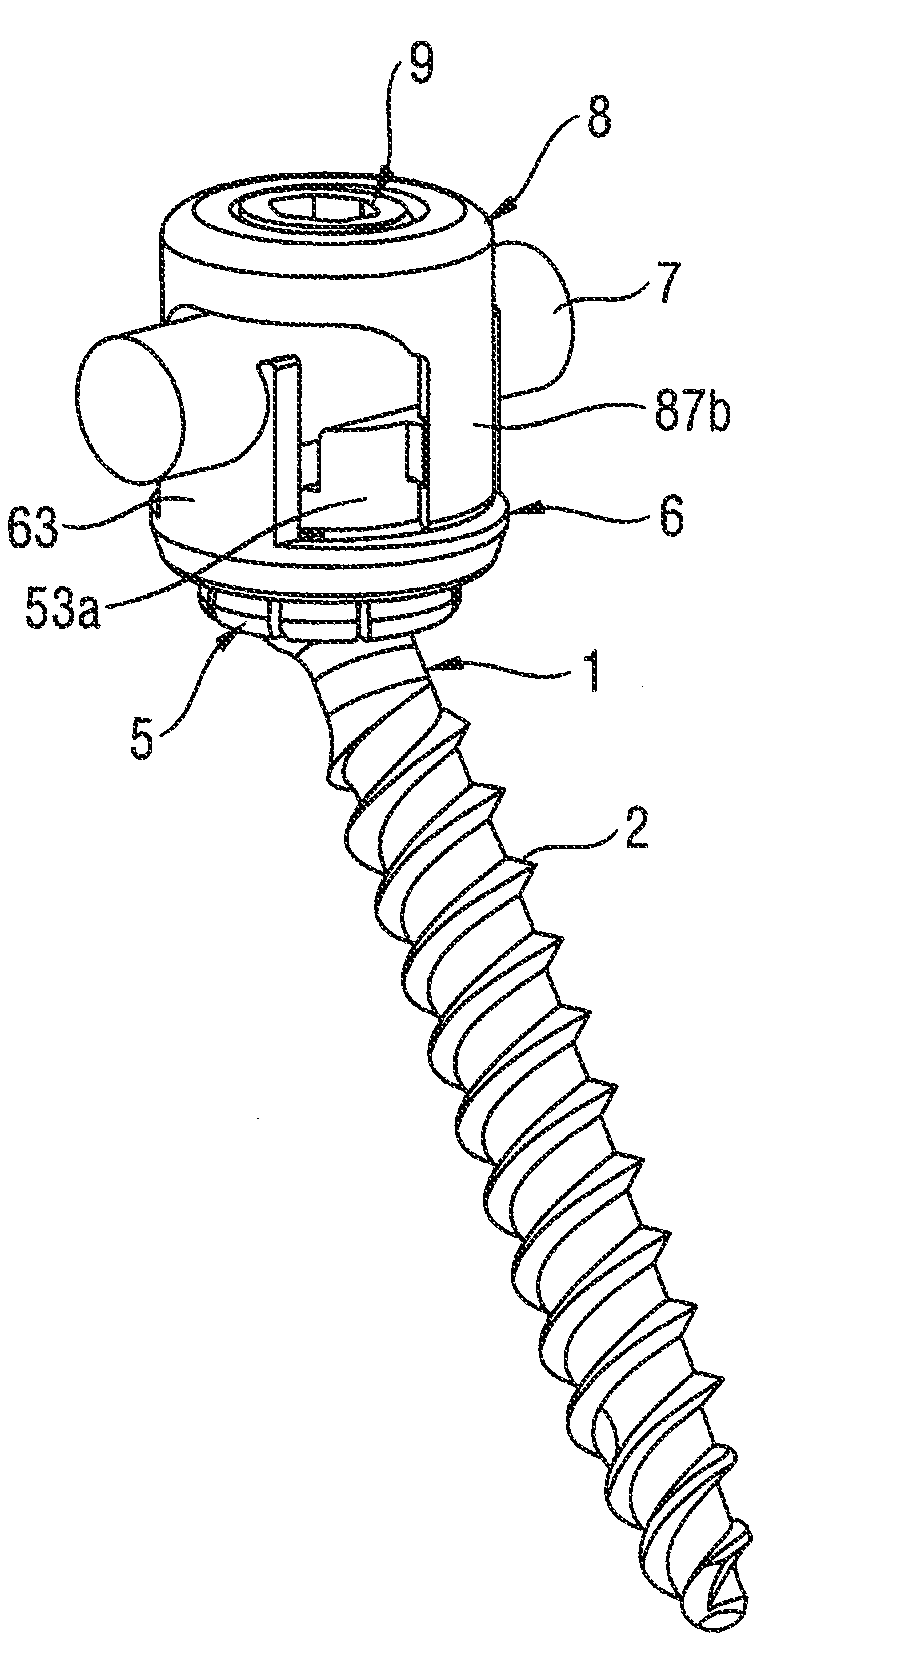 Polyaxial bone anchoring device